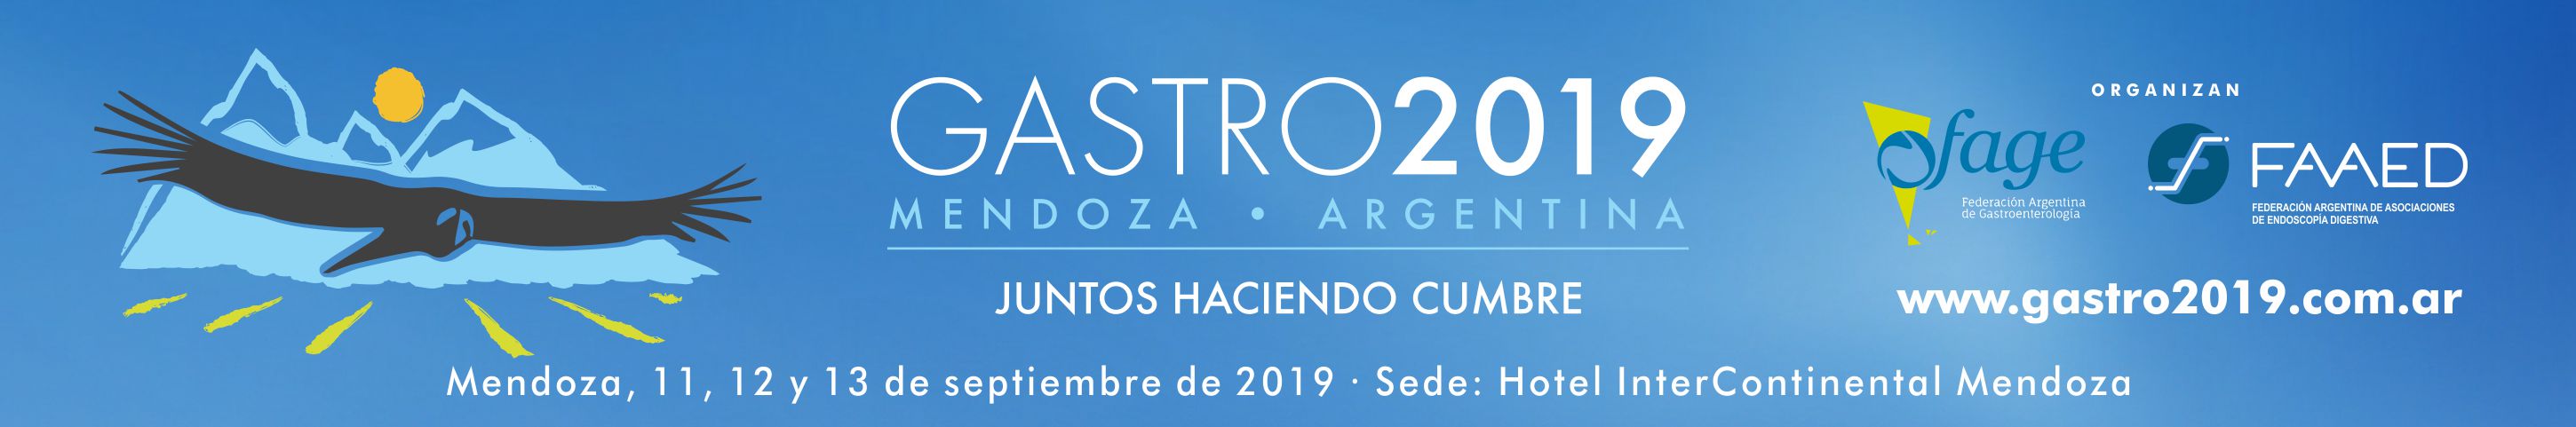 Congreso Gastro 2019